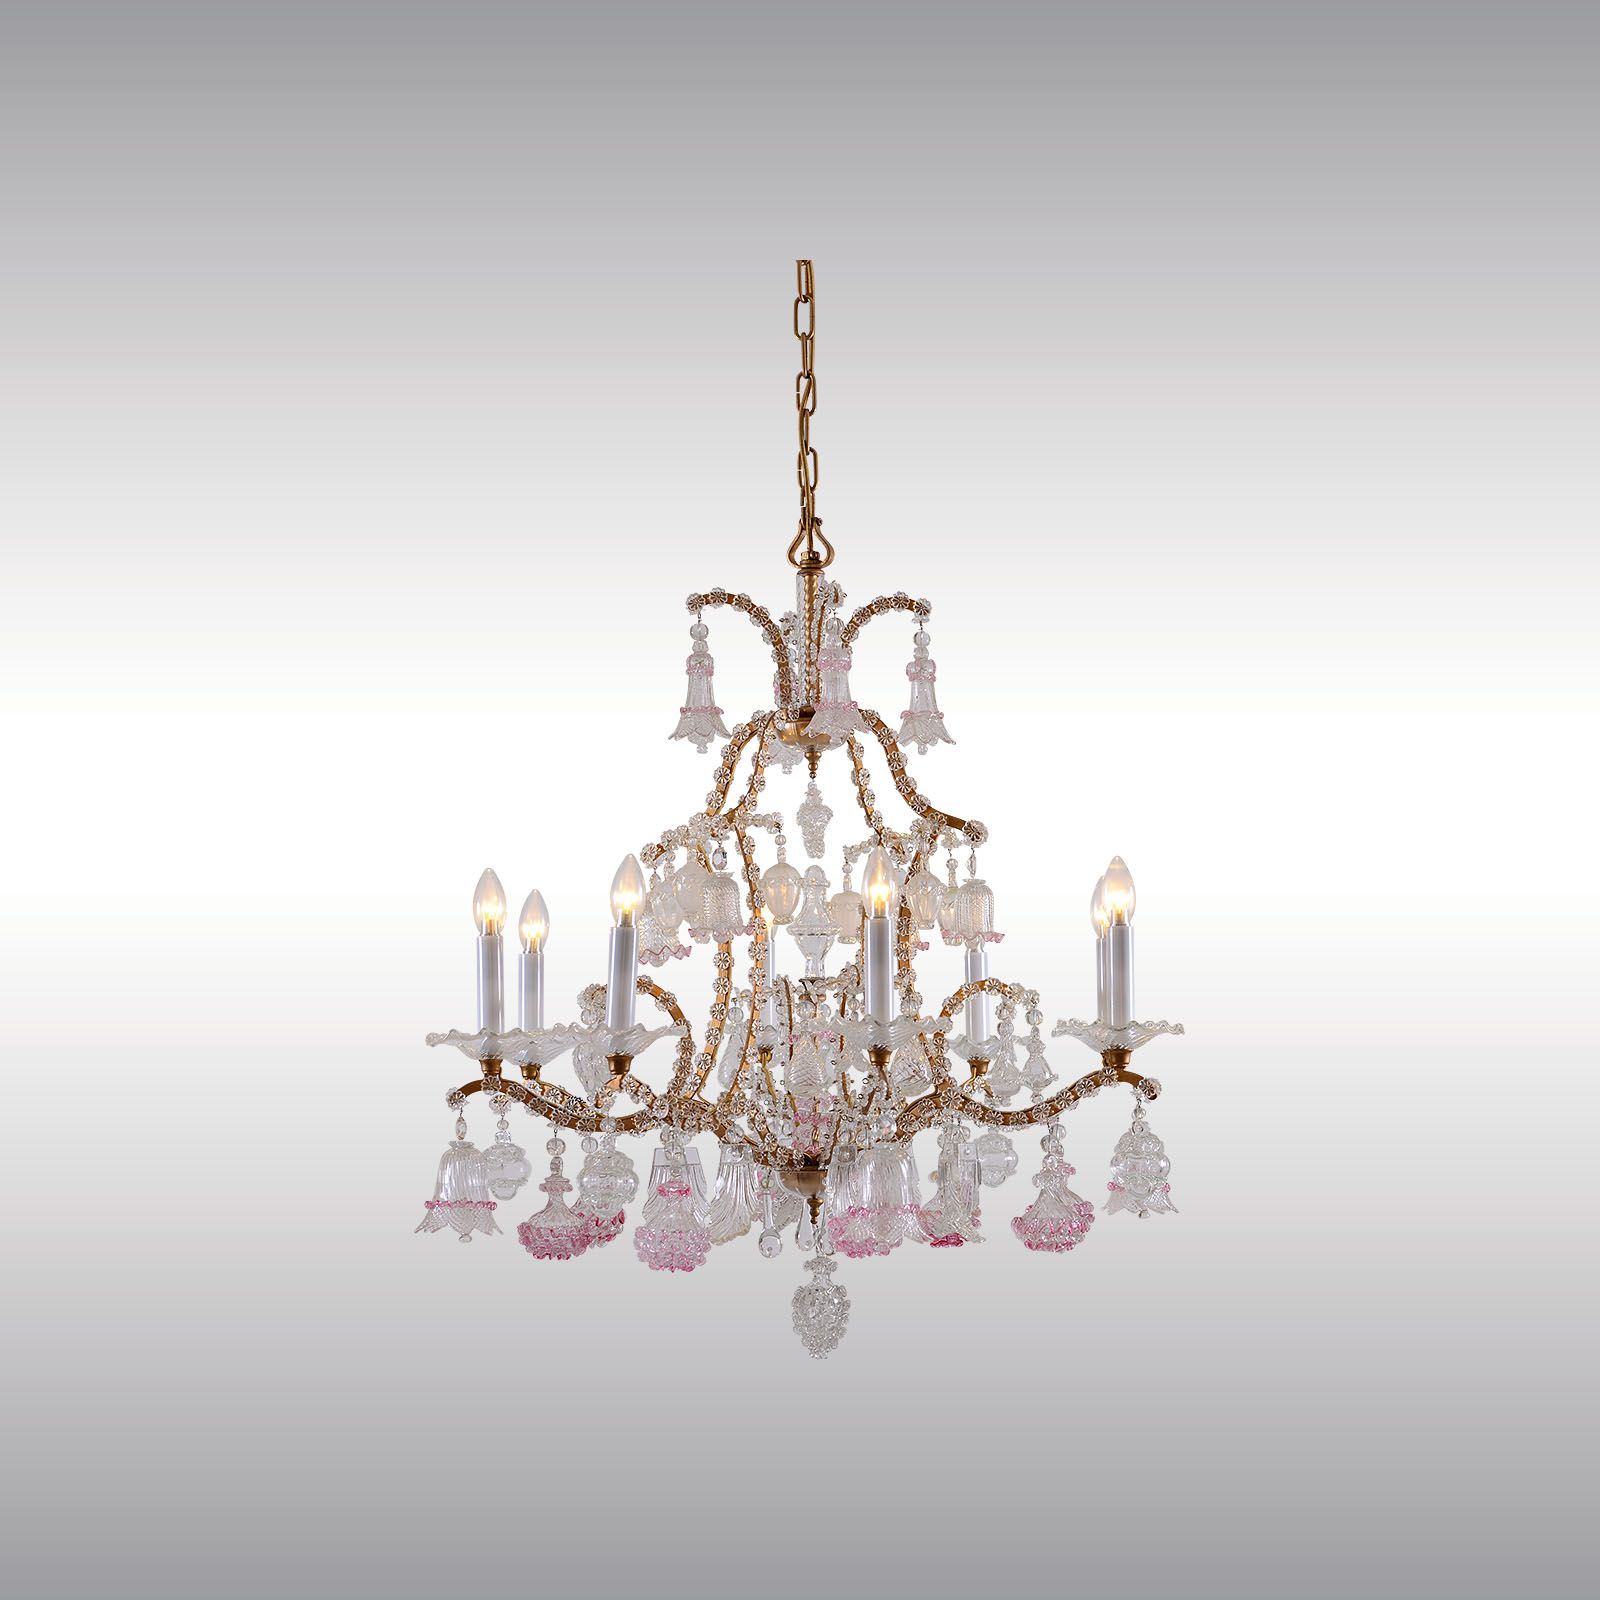 WOKA LAMPS VIENNA - OrderNr.: 80021|Barockluster - Design: Maria Theresien Stil